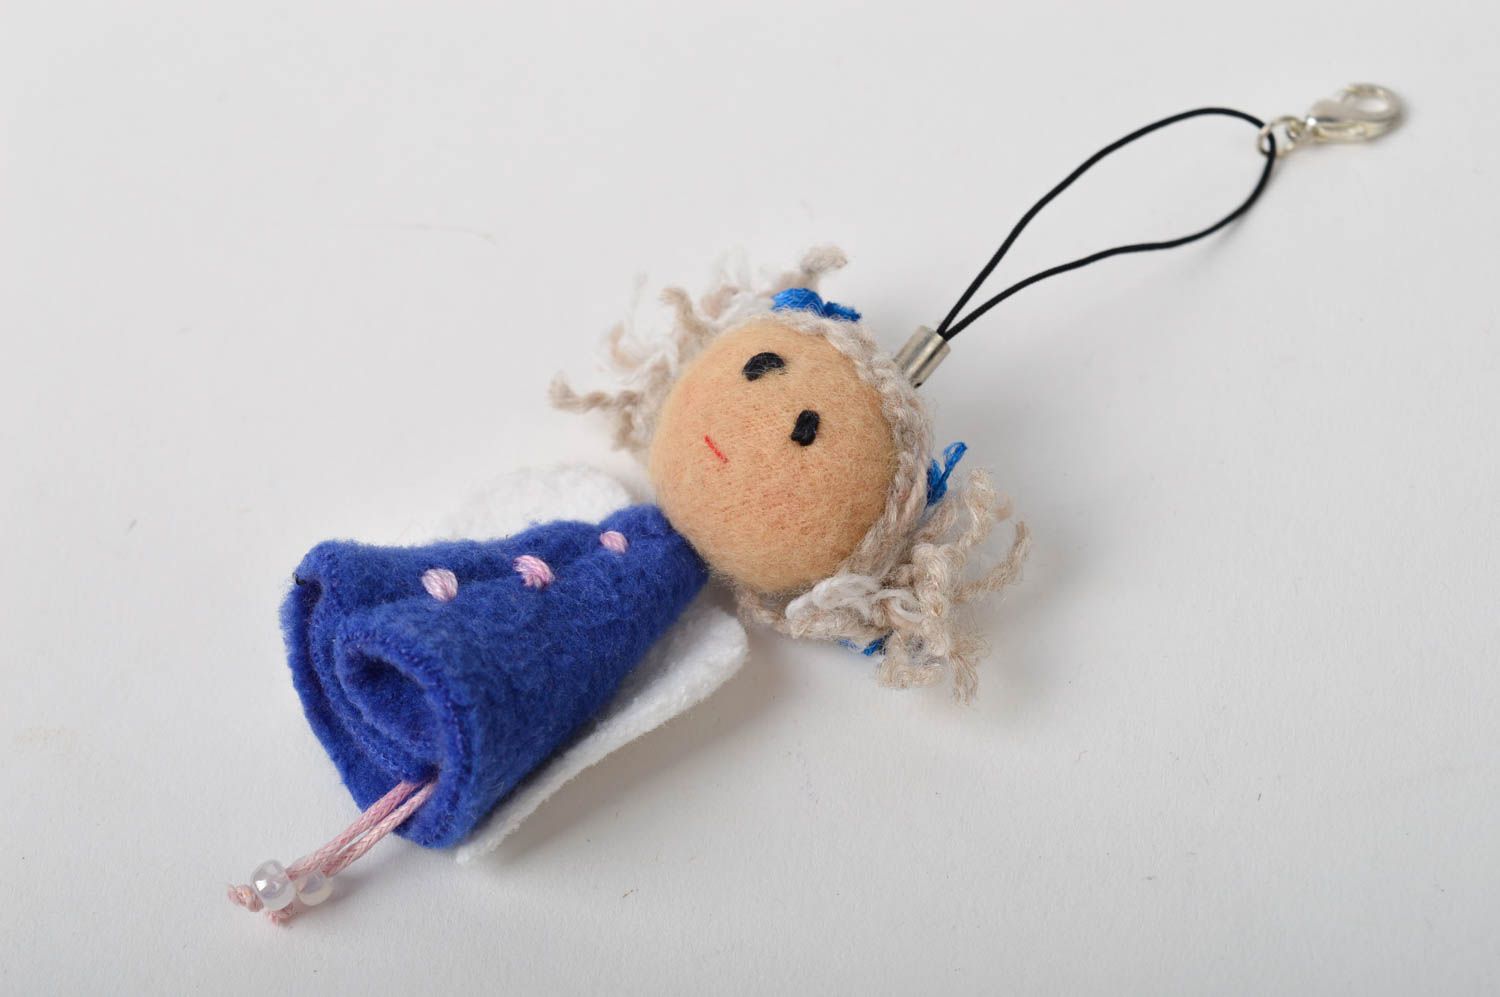 Handmade keychain textile toy unusual doll gift ideas unusual keychain photo 1